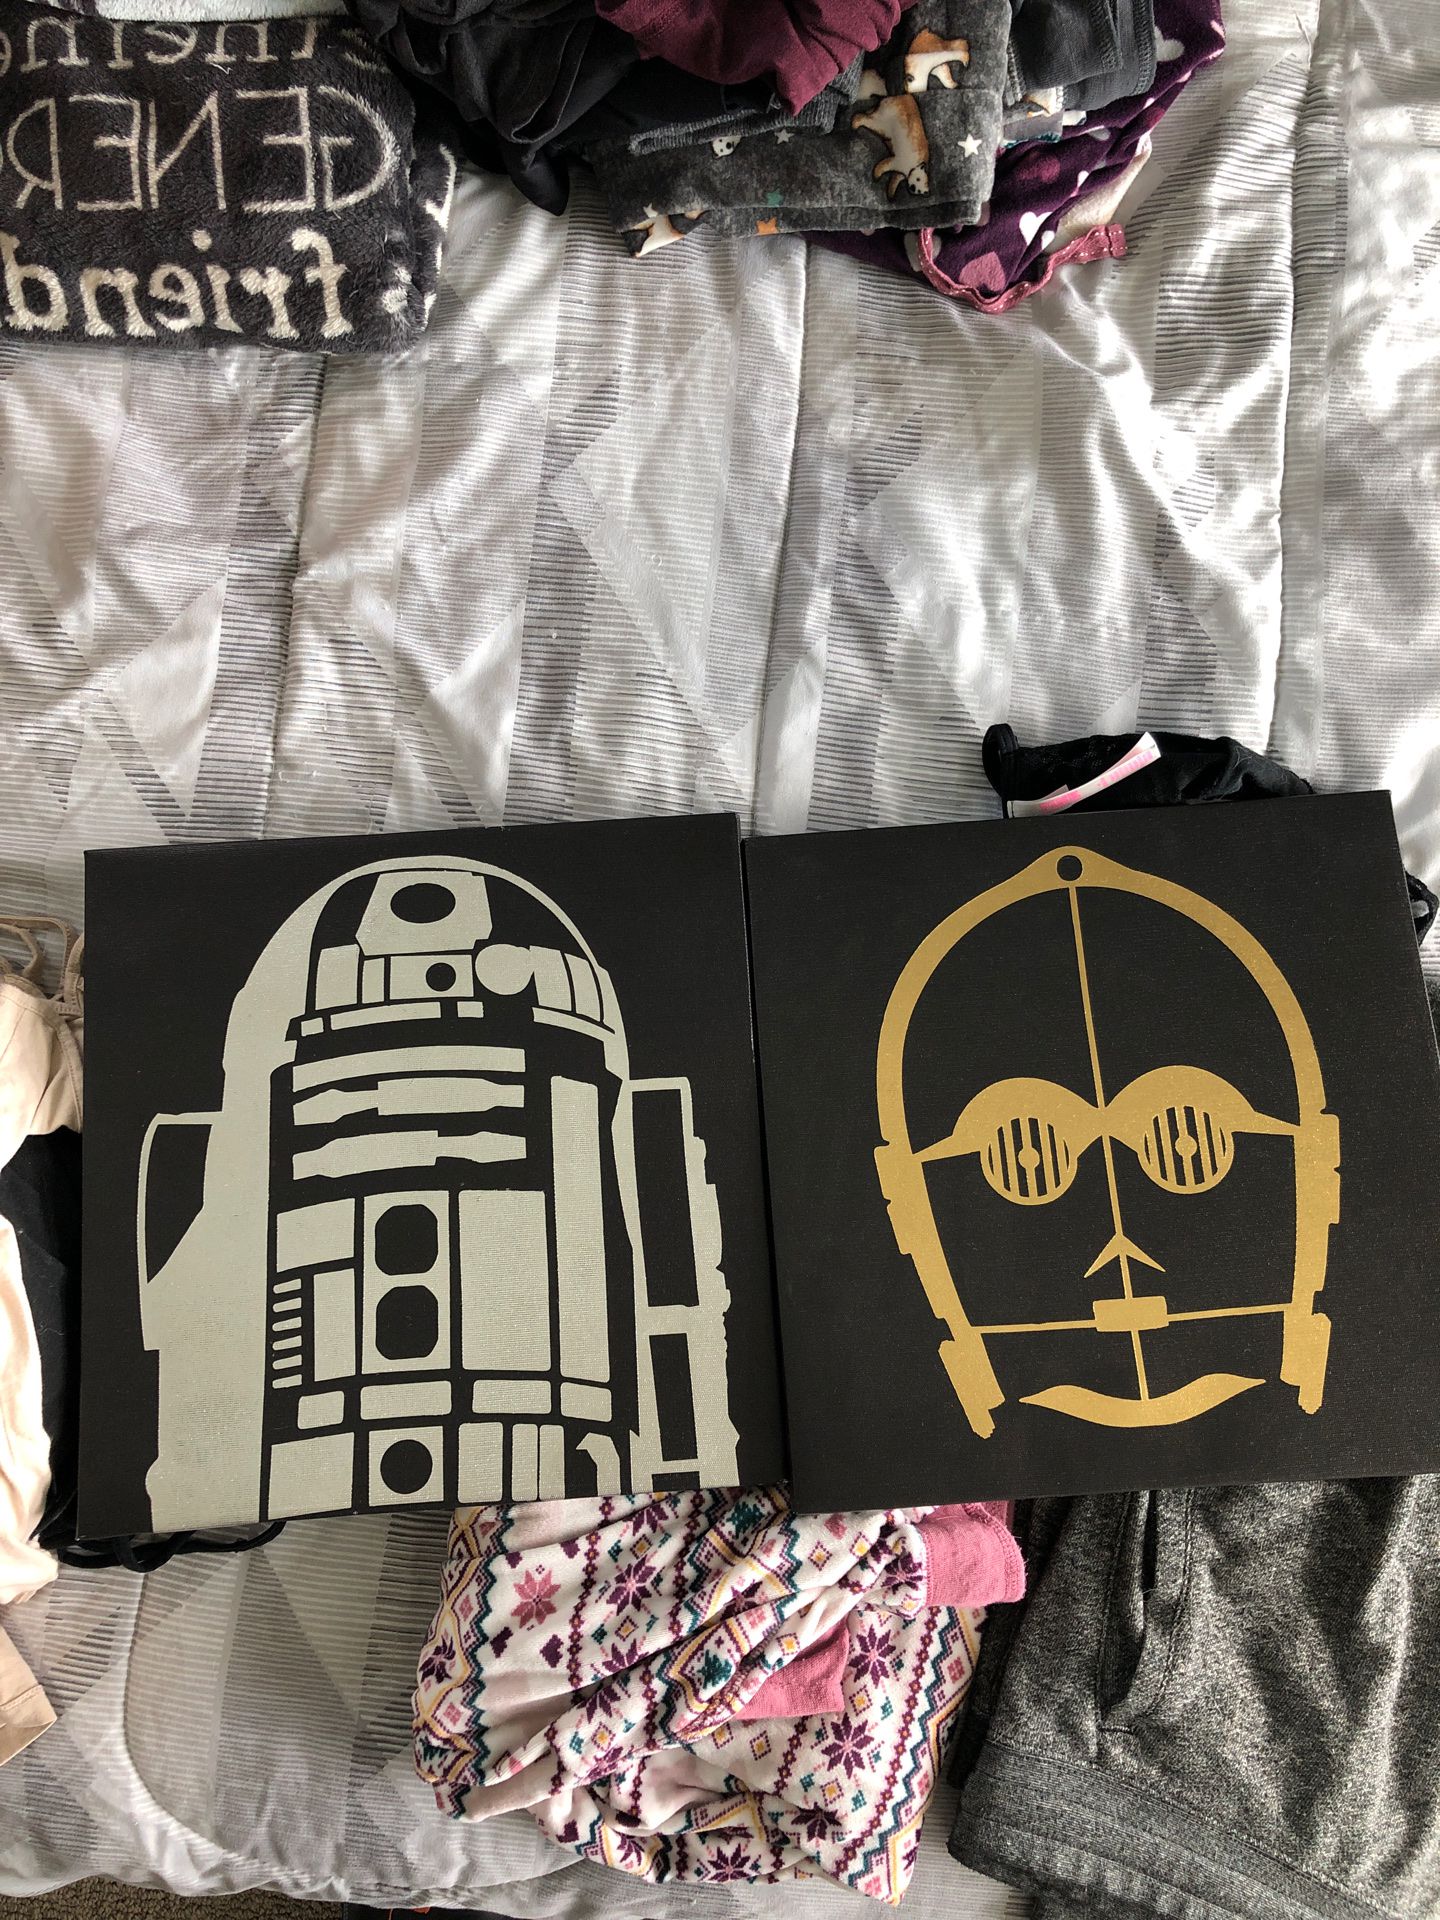 Star Wars: R2-D2 and C-3PO 12x12 Inch art (Disney tagged)